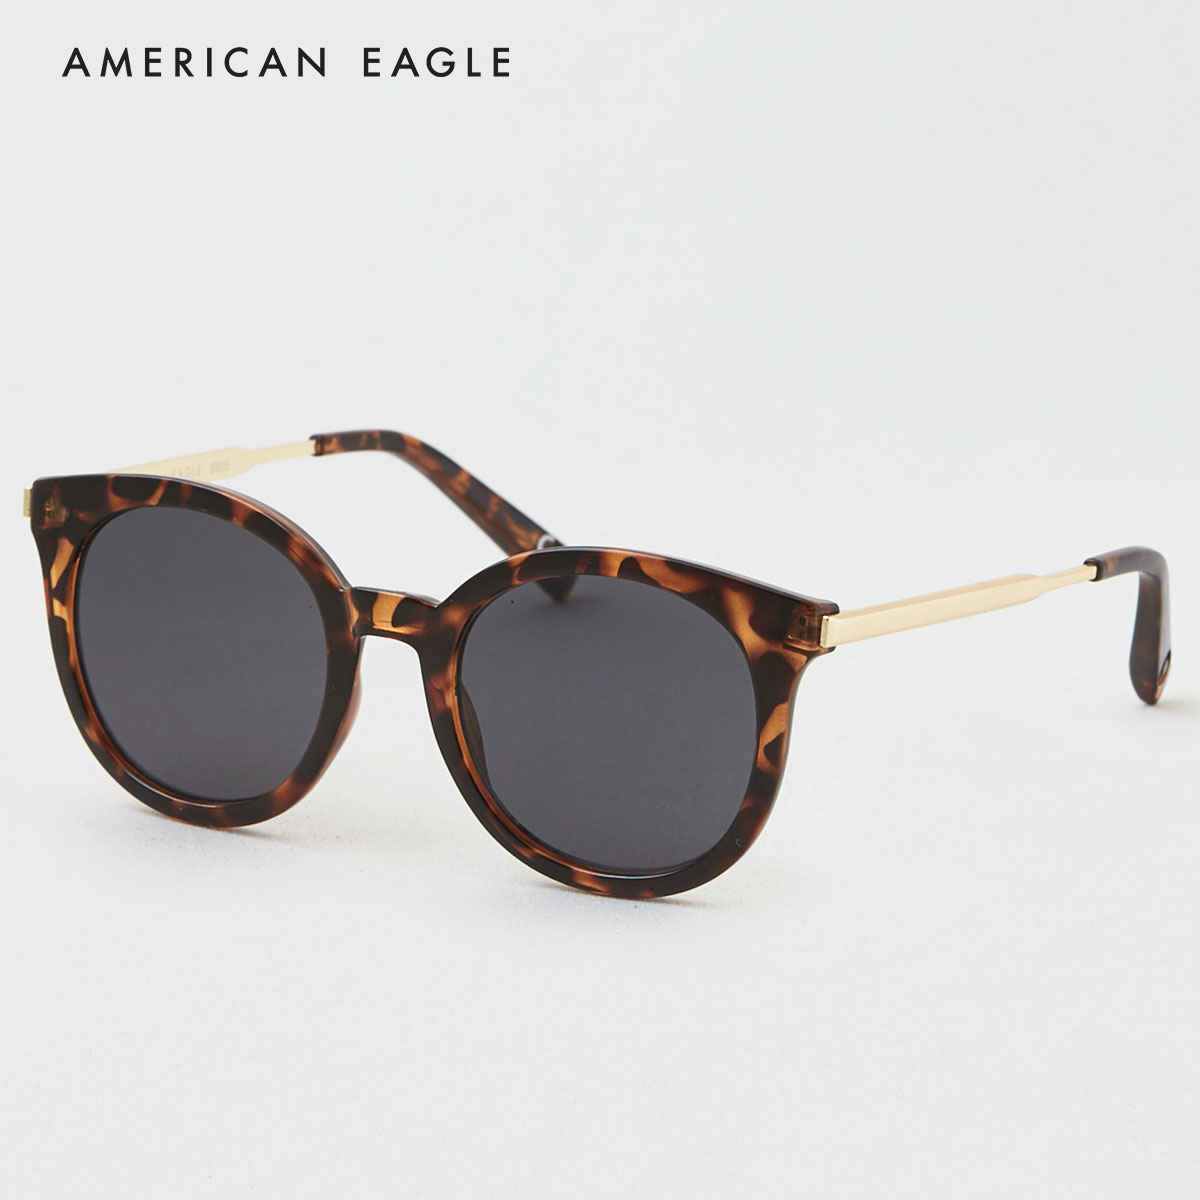 American Eagle Tortoise Round Sunglasses แว่นตา ผู้หญิง แฟชั่น(048-8605-251)